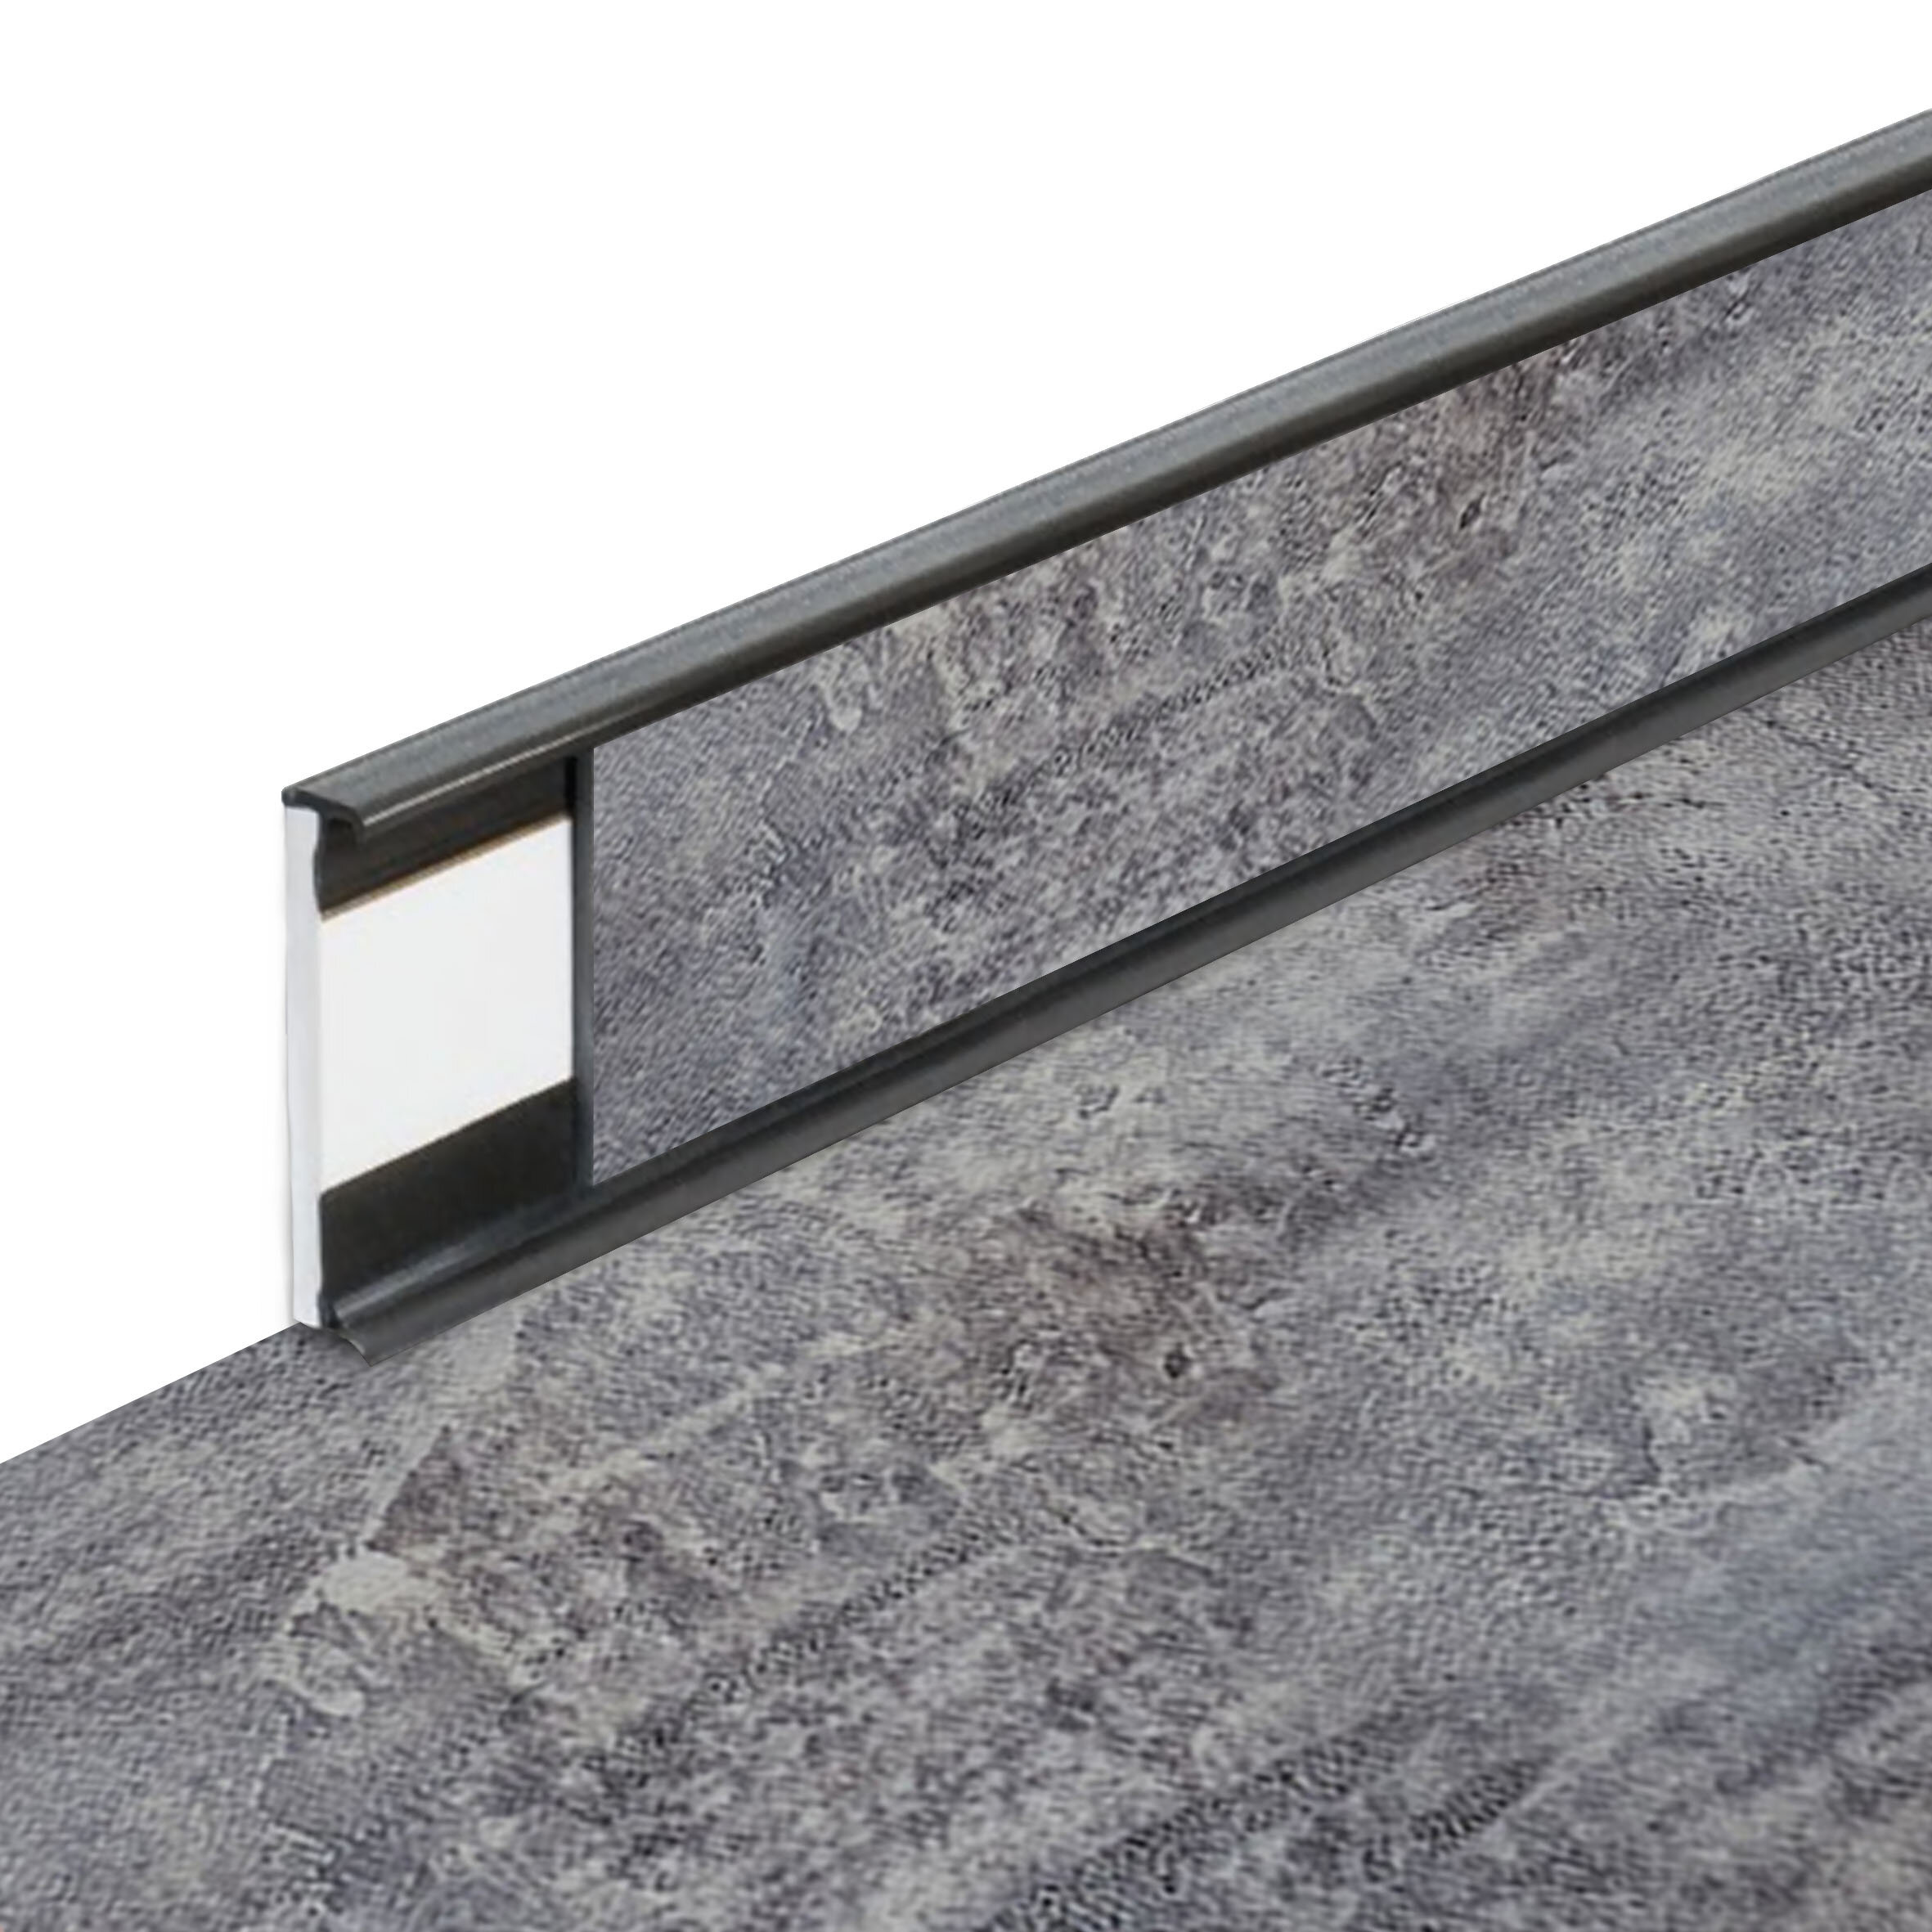 PVC vinylová soklová podlahová lišta Fortelock Business Forsen Mountain Peak C017 Graphite - dĺžka 200 cm, výška 5,8 cm, hrúbka 1,2 cm